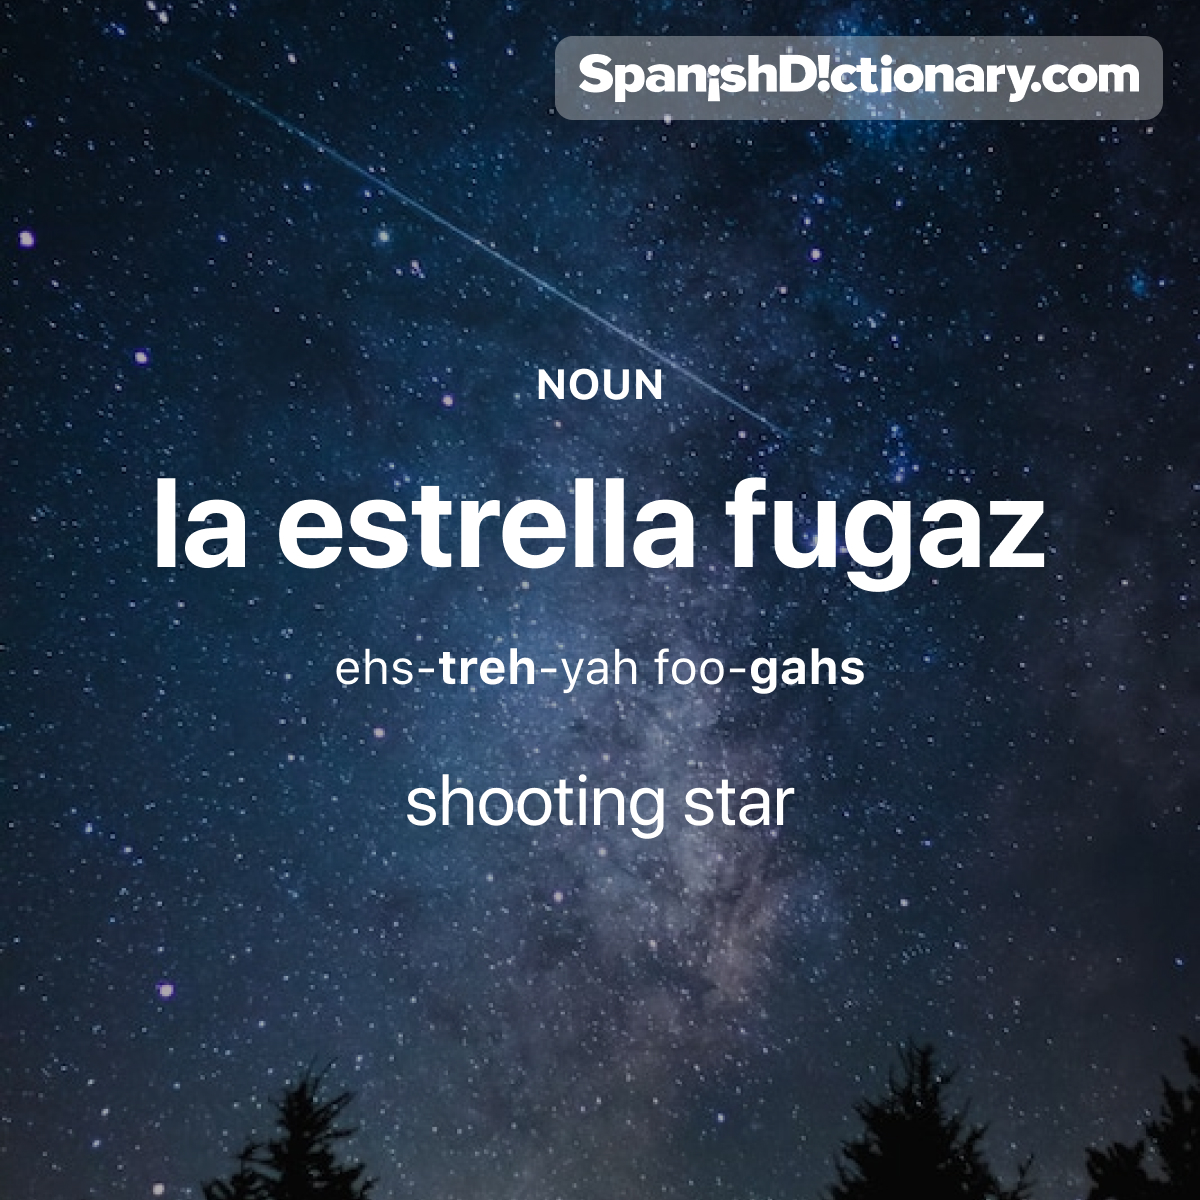 Today's #WordOfTheDay is 'estrella fugaz.' 🌠 For example: Si ves una estrella fugaz, ¡pide un deseo! - If you see a shooting star, make a wish!
.
.
.
#EstudiaEspañol #StudySpanish #AprendeEspañol #LearnSpanish #Español #Spanish #LearningSpanish #PalabraDelDia #estrellafugaz